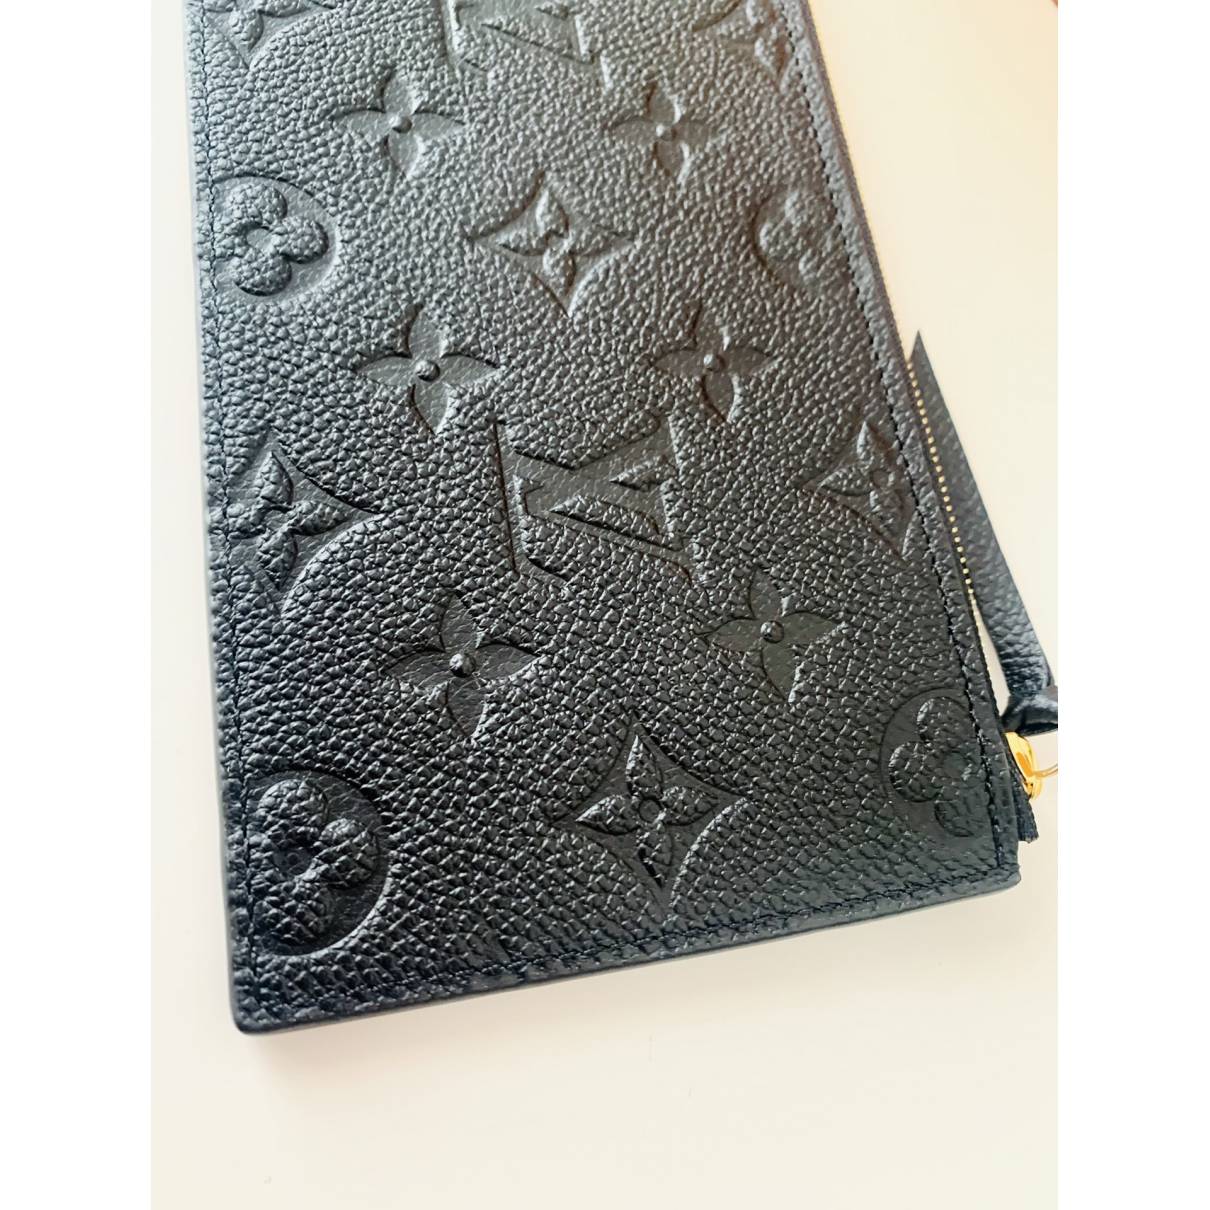 Louis Vuitton Leather Black Wallets for Women